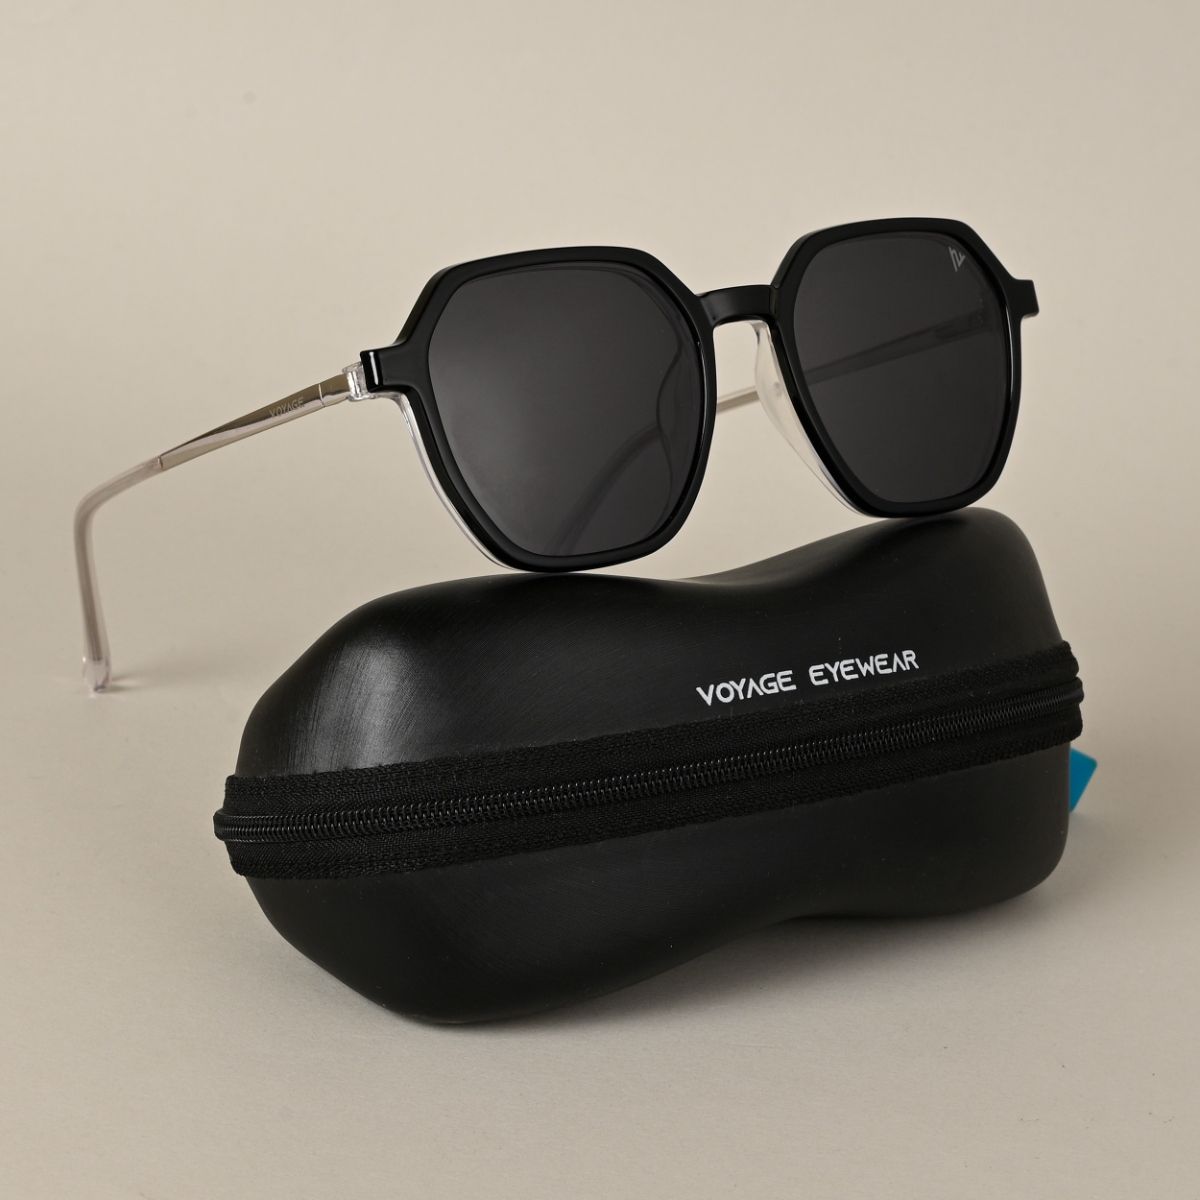 Buy Voyage Grey Rectangle Polarized Sunglasses for Men & Women - 1301Mg3972  (58) online